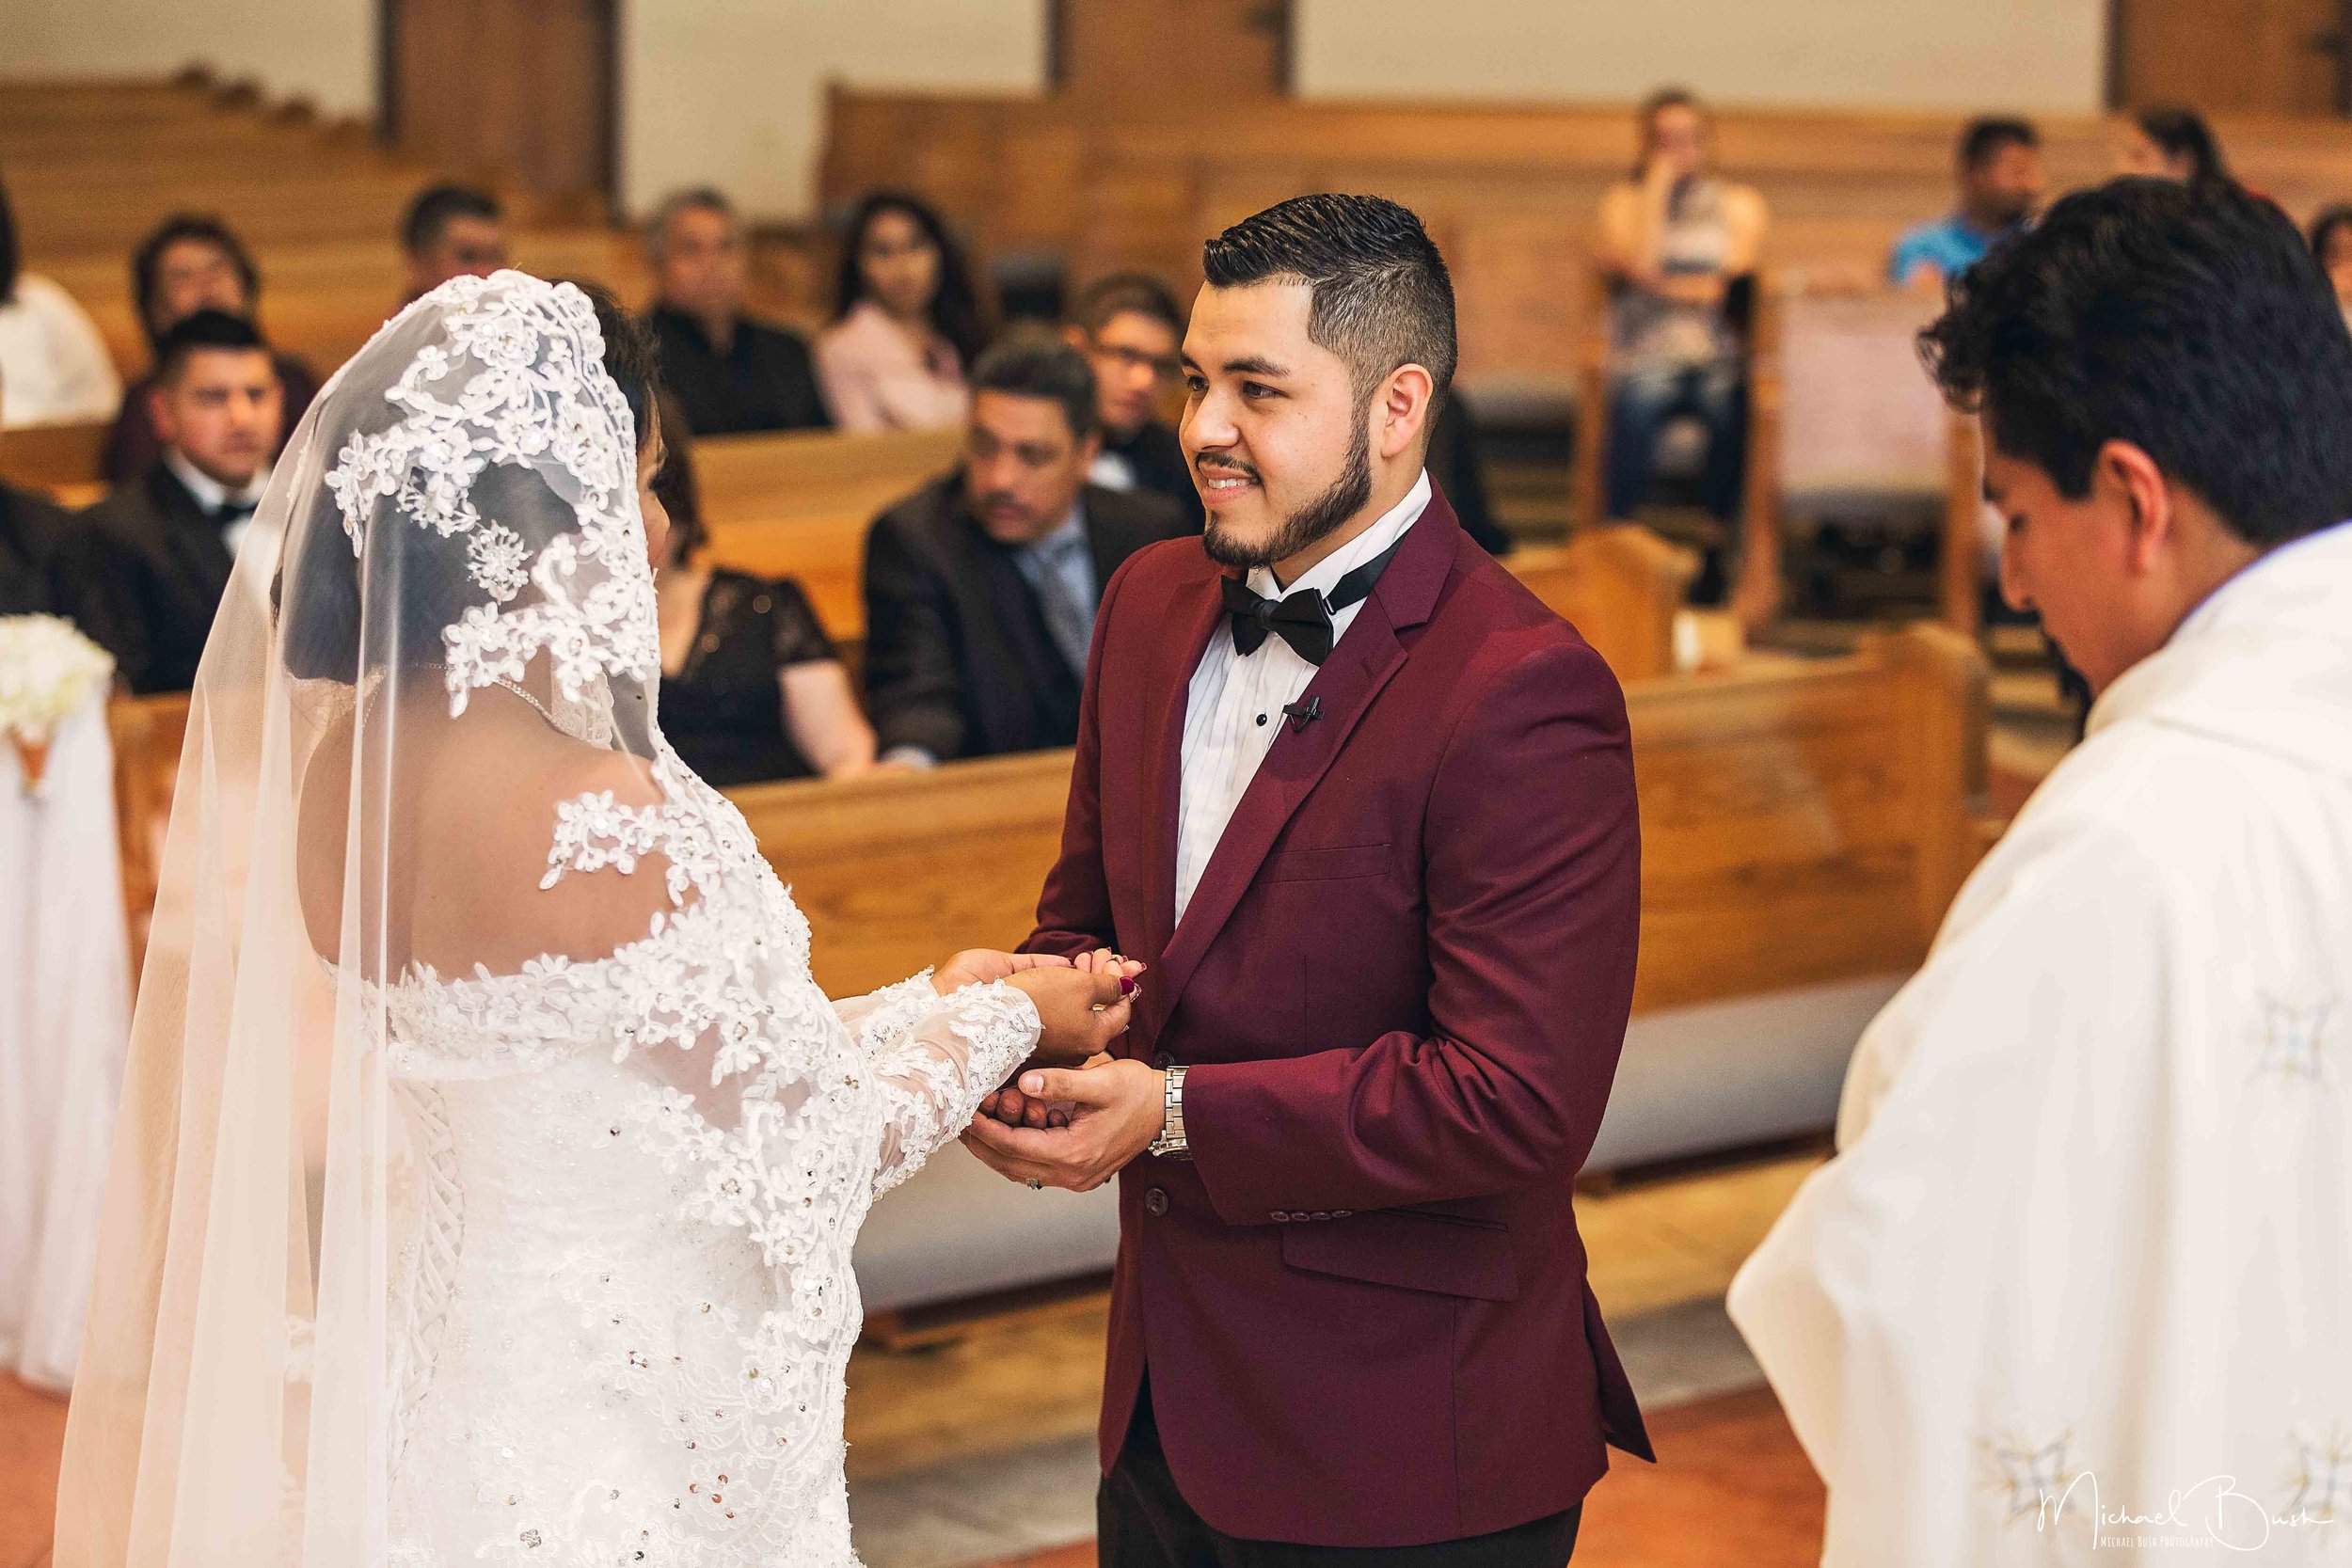 Wedding-Details-Bride-Fort Worth-colors-Ceremony-weddingceremony-brides-groom-ido-church-rituals.jpg